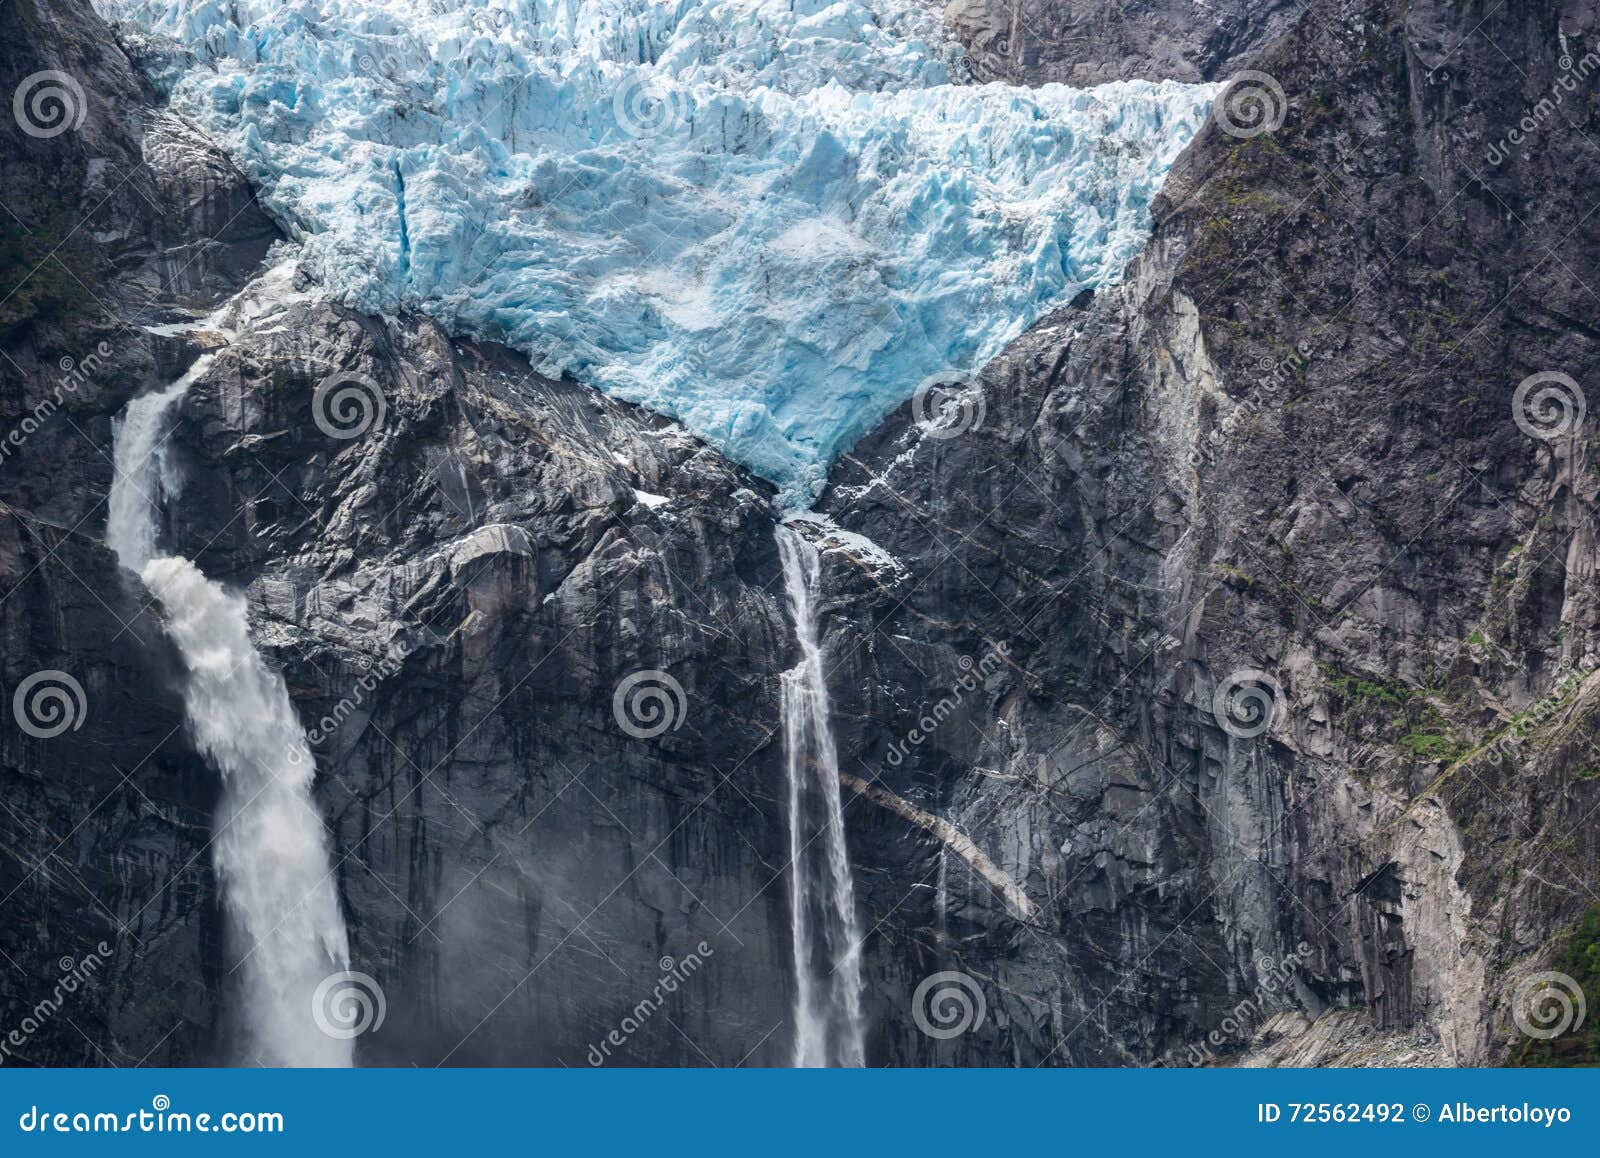 hanging glacier of queulat national park, chile